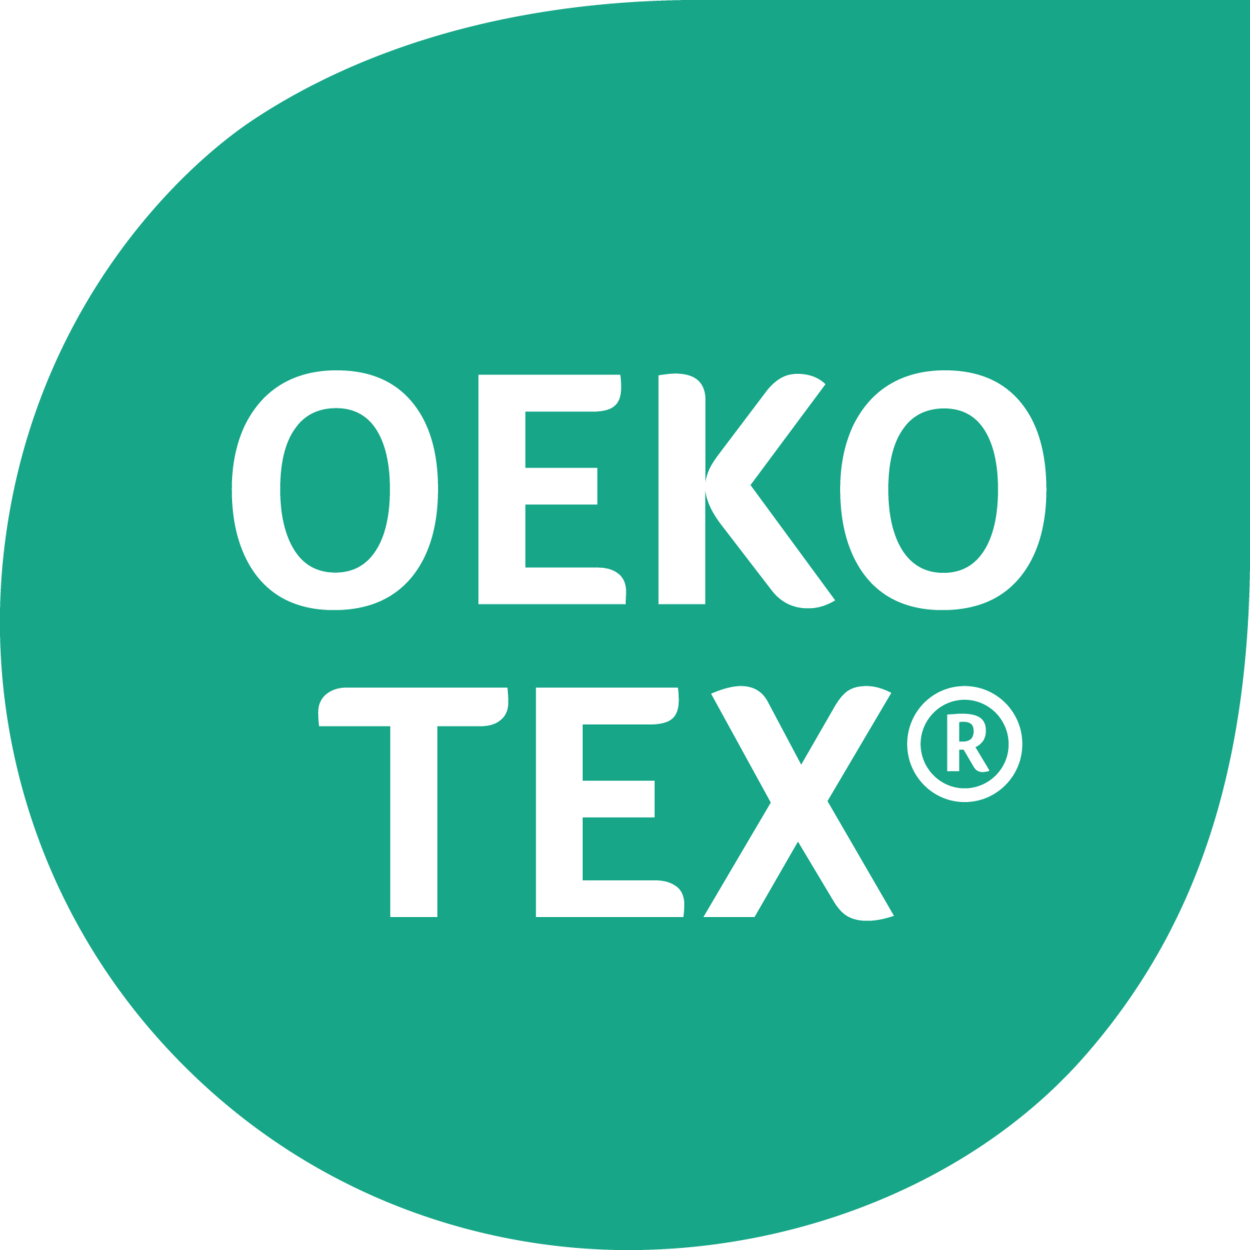 csm_Logo_OEKO-TEX_green_c8f8d16354 (1).png (85 KB)